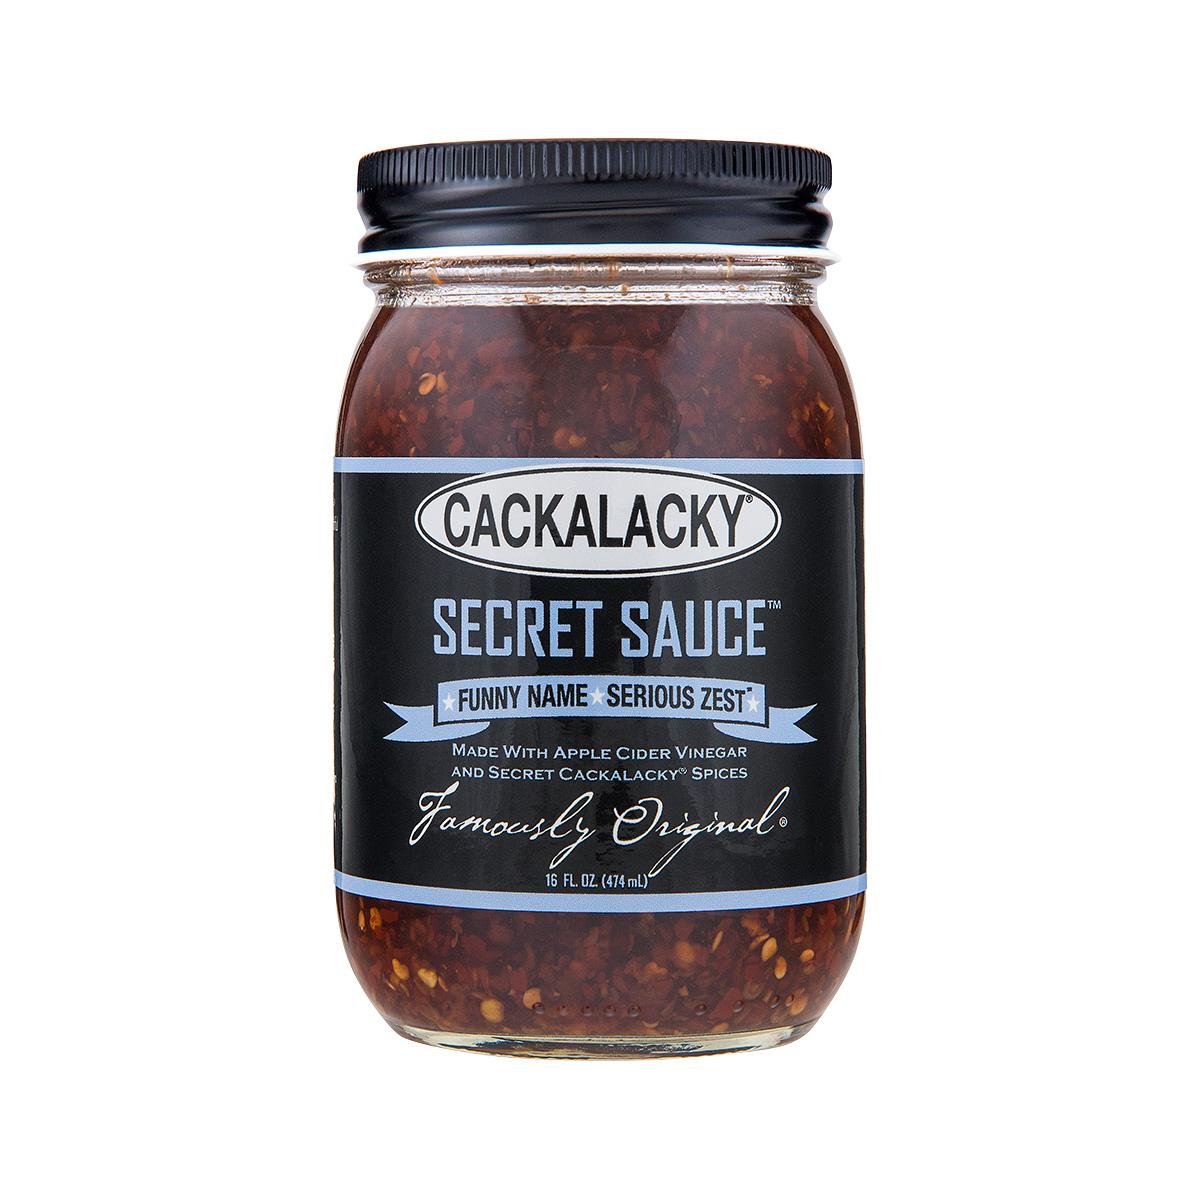  Cackalacky Secret Sauce